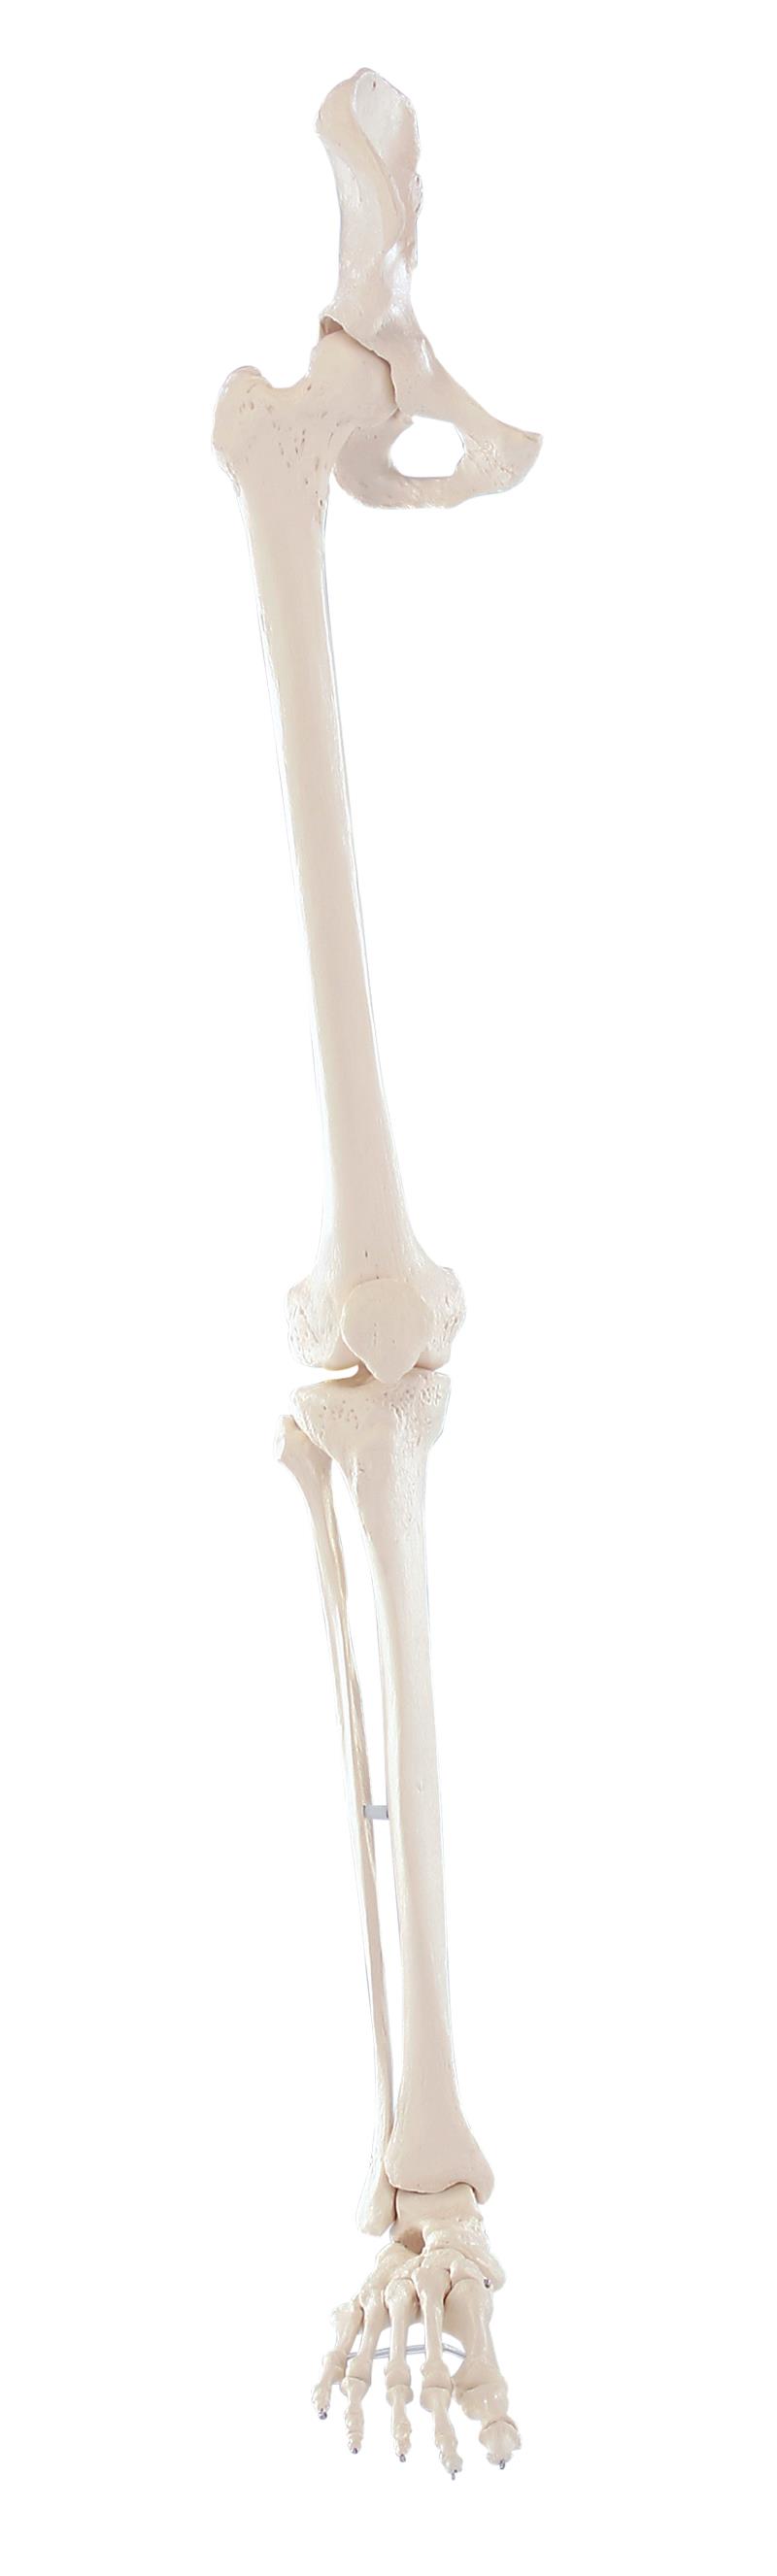 Skeleton of leg with half pelvis and flexible foot